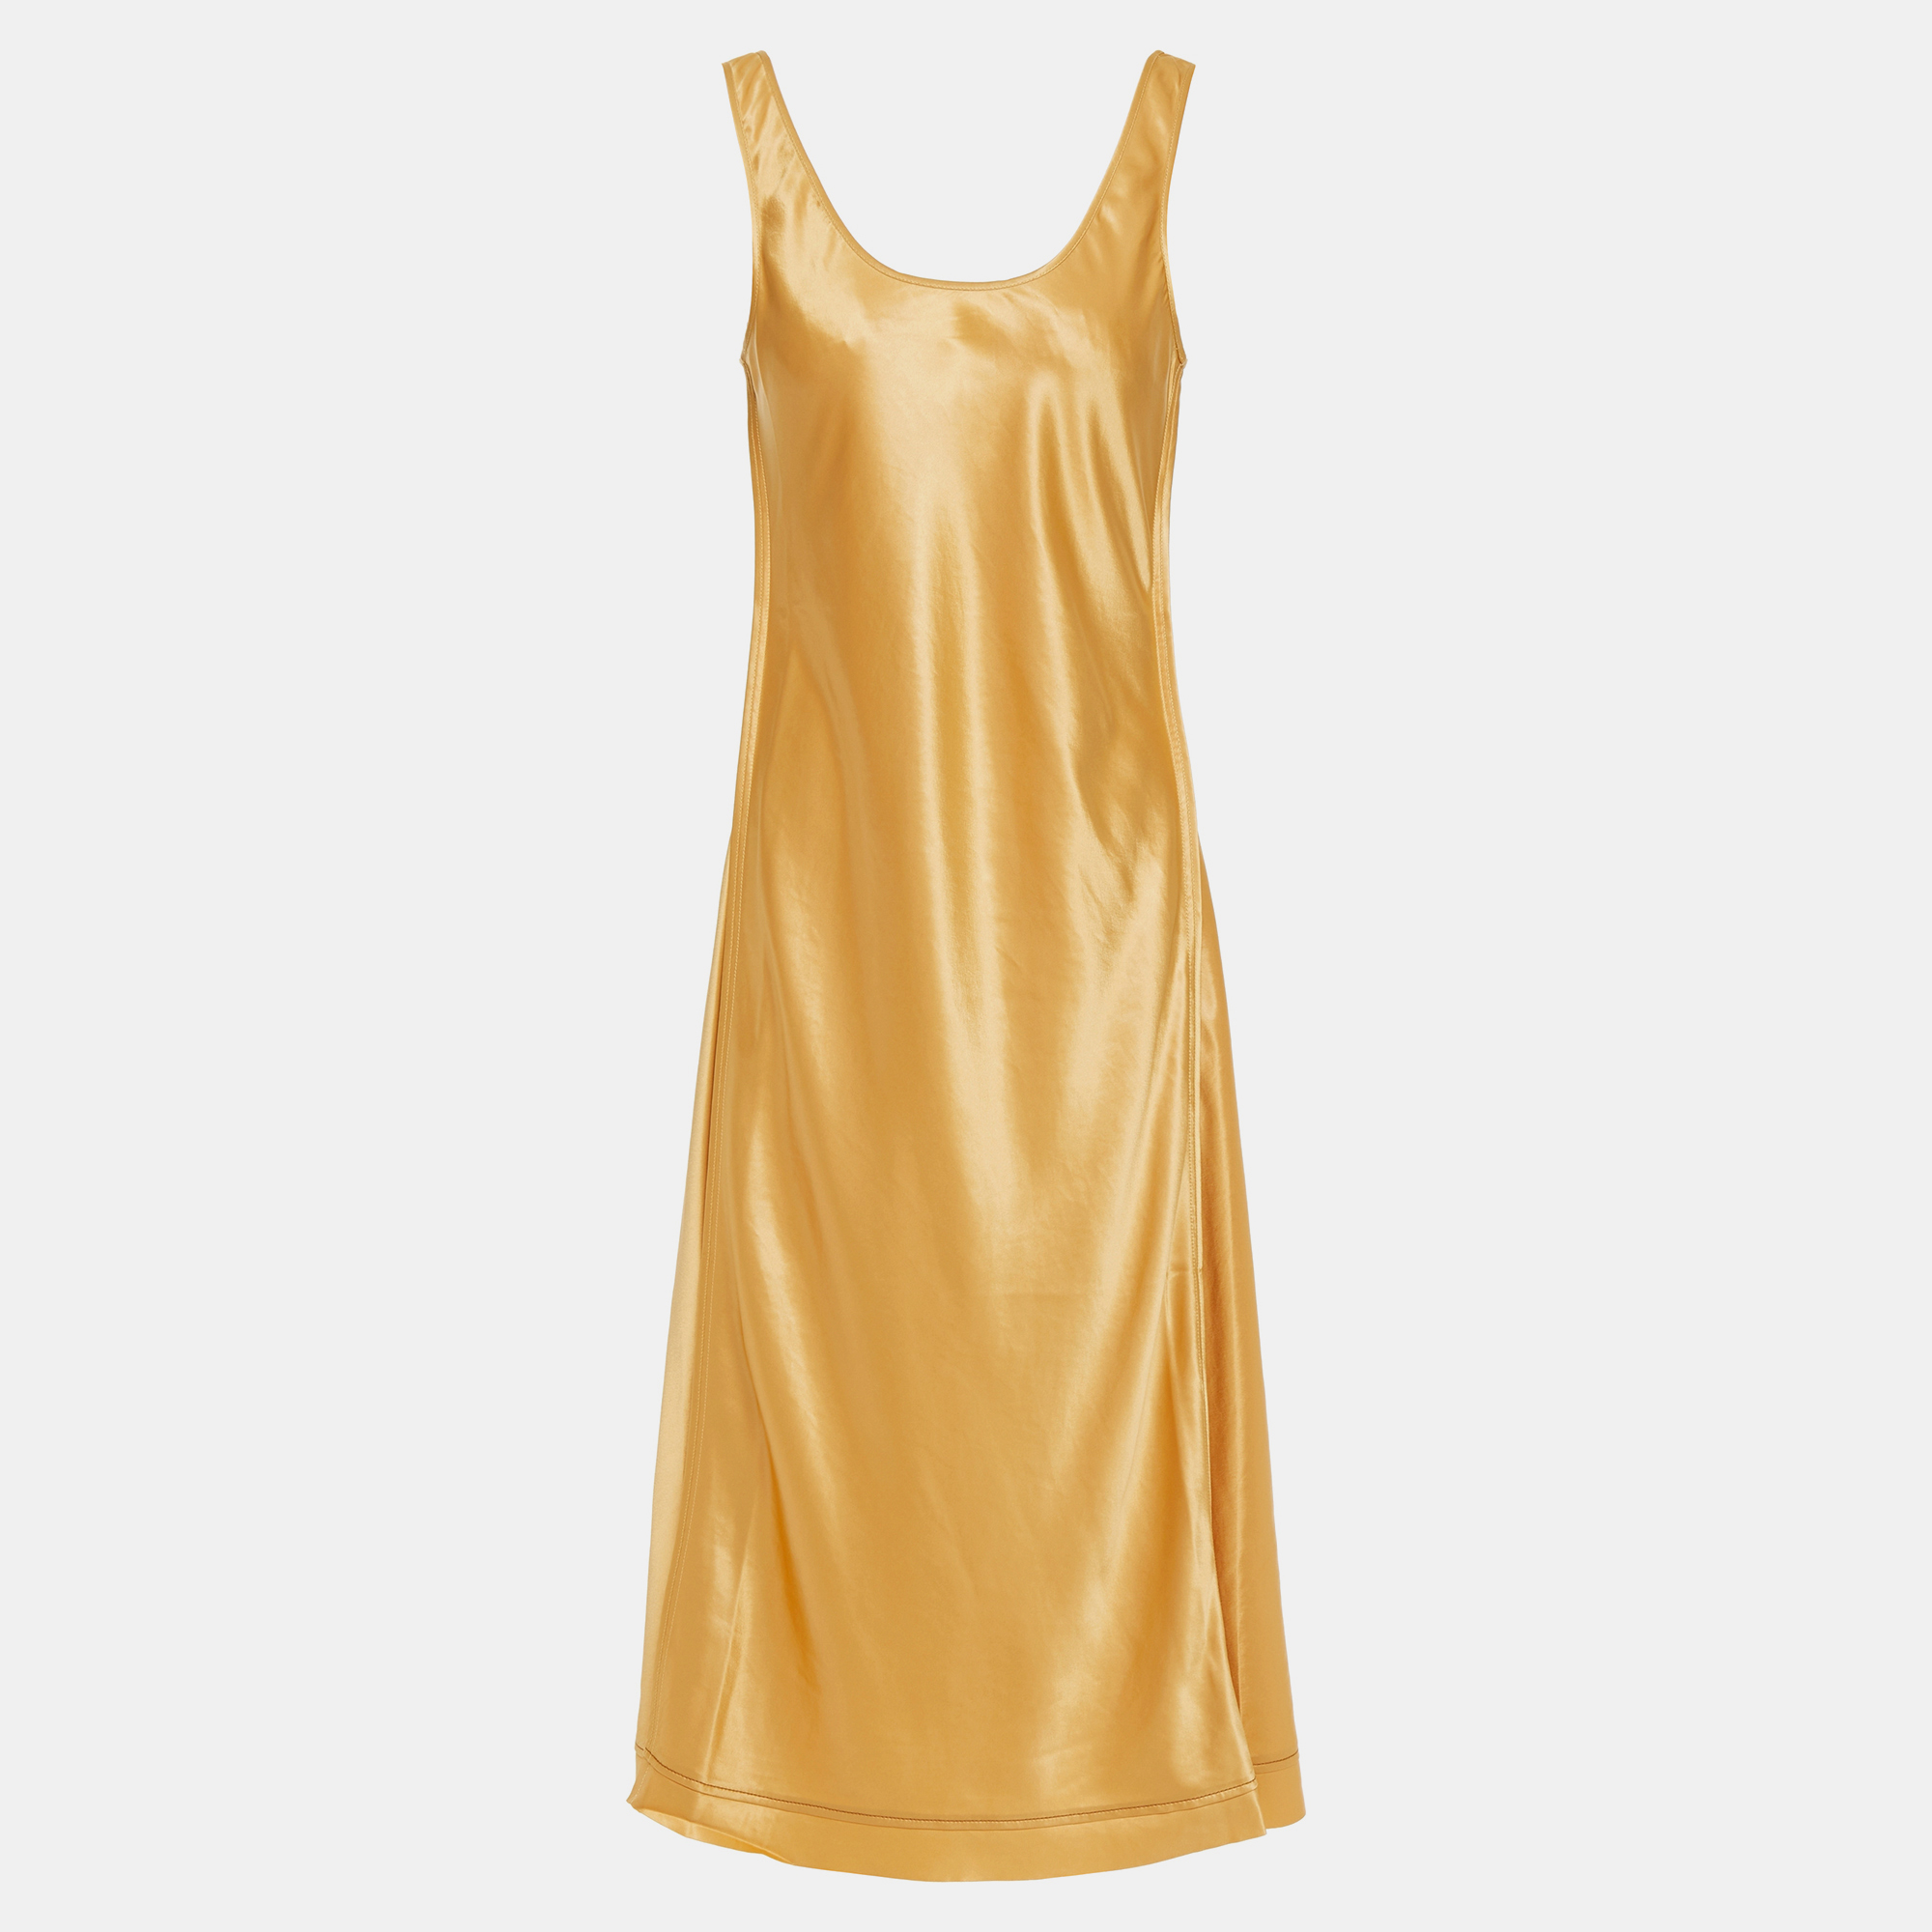 Acne studios gold satin sleeveless midi dress s (eu 34)